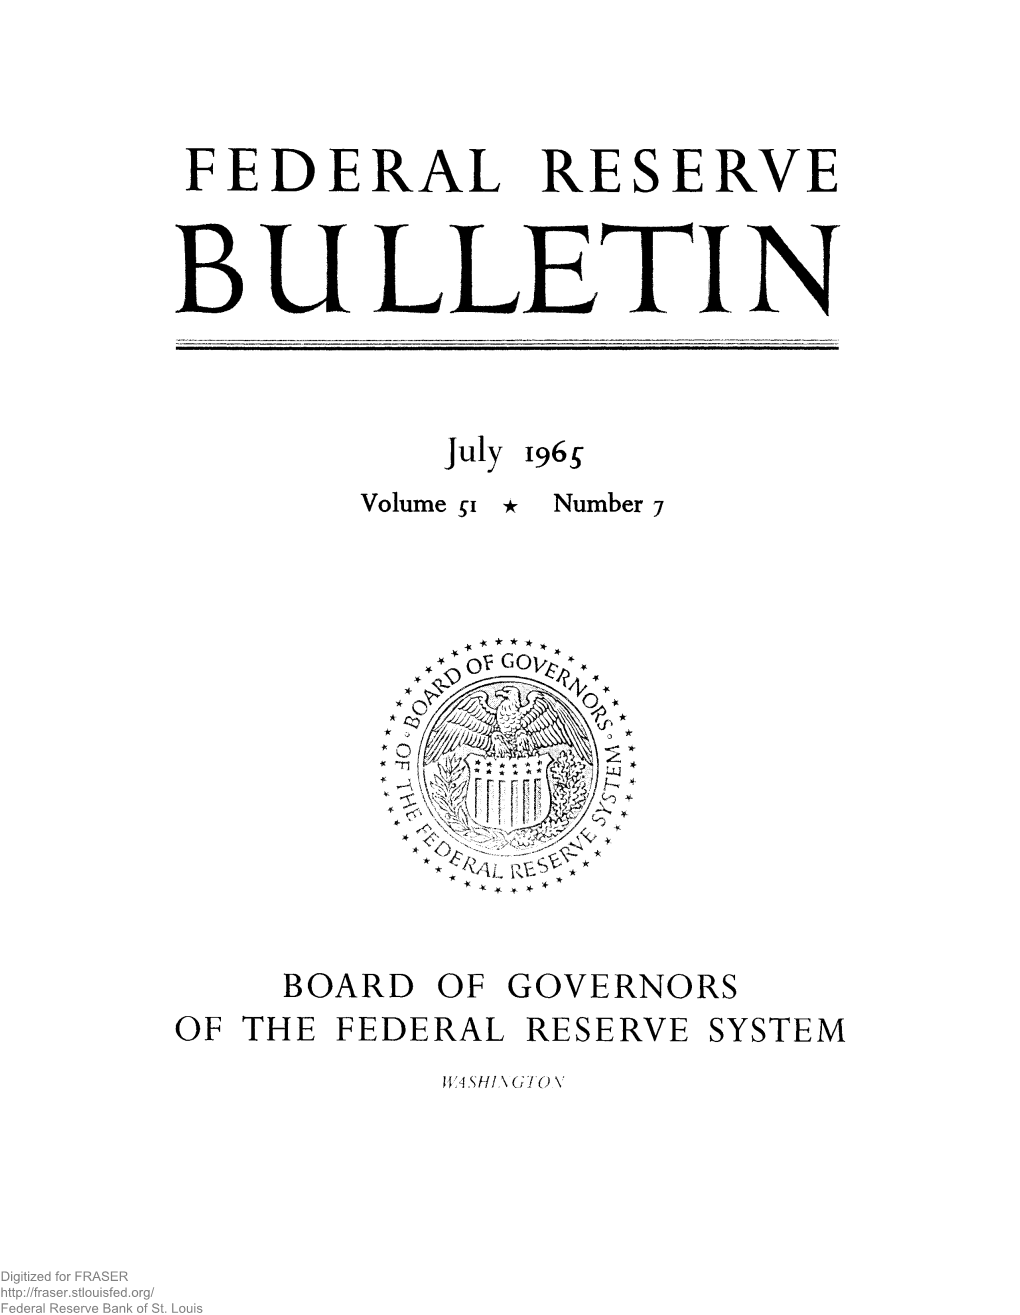 Federal Reserve Bulletin July 1965